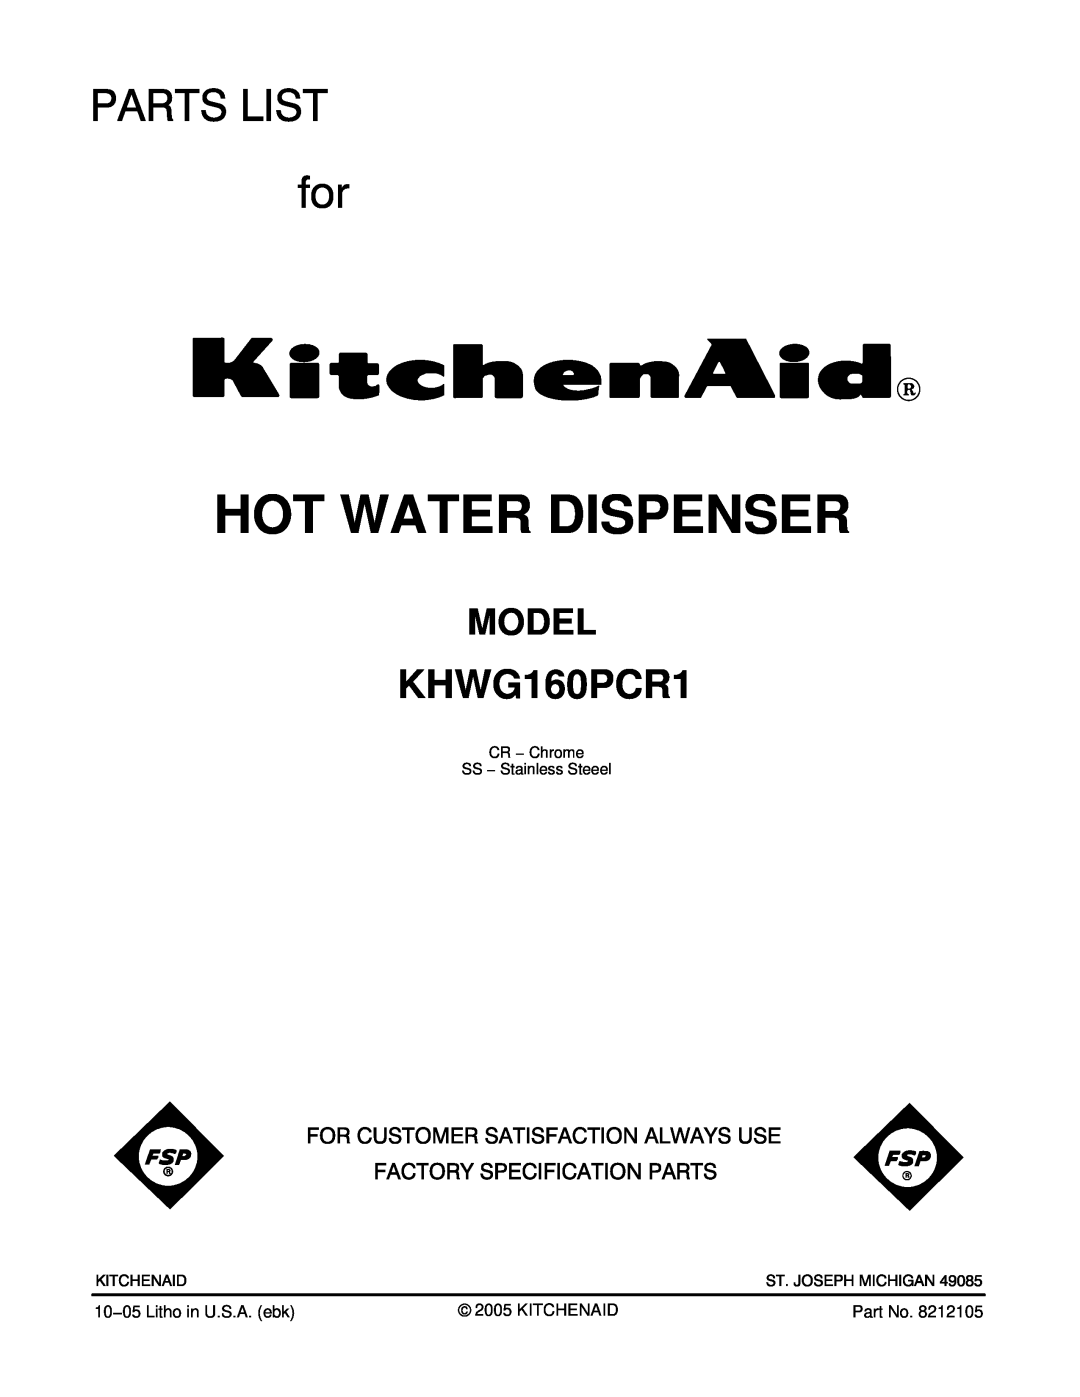 KitchenAid KHWG160PCR1 manual Hot Water Dispenser, Model, CR − Chrome SS − Stainless Steeel 